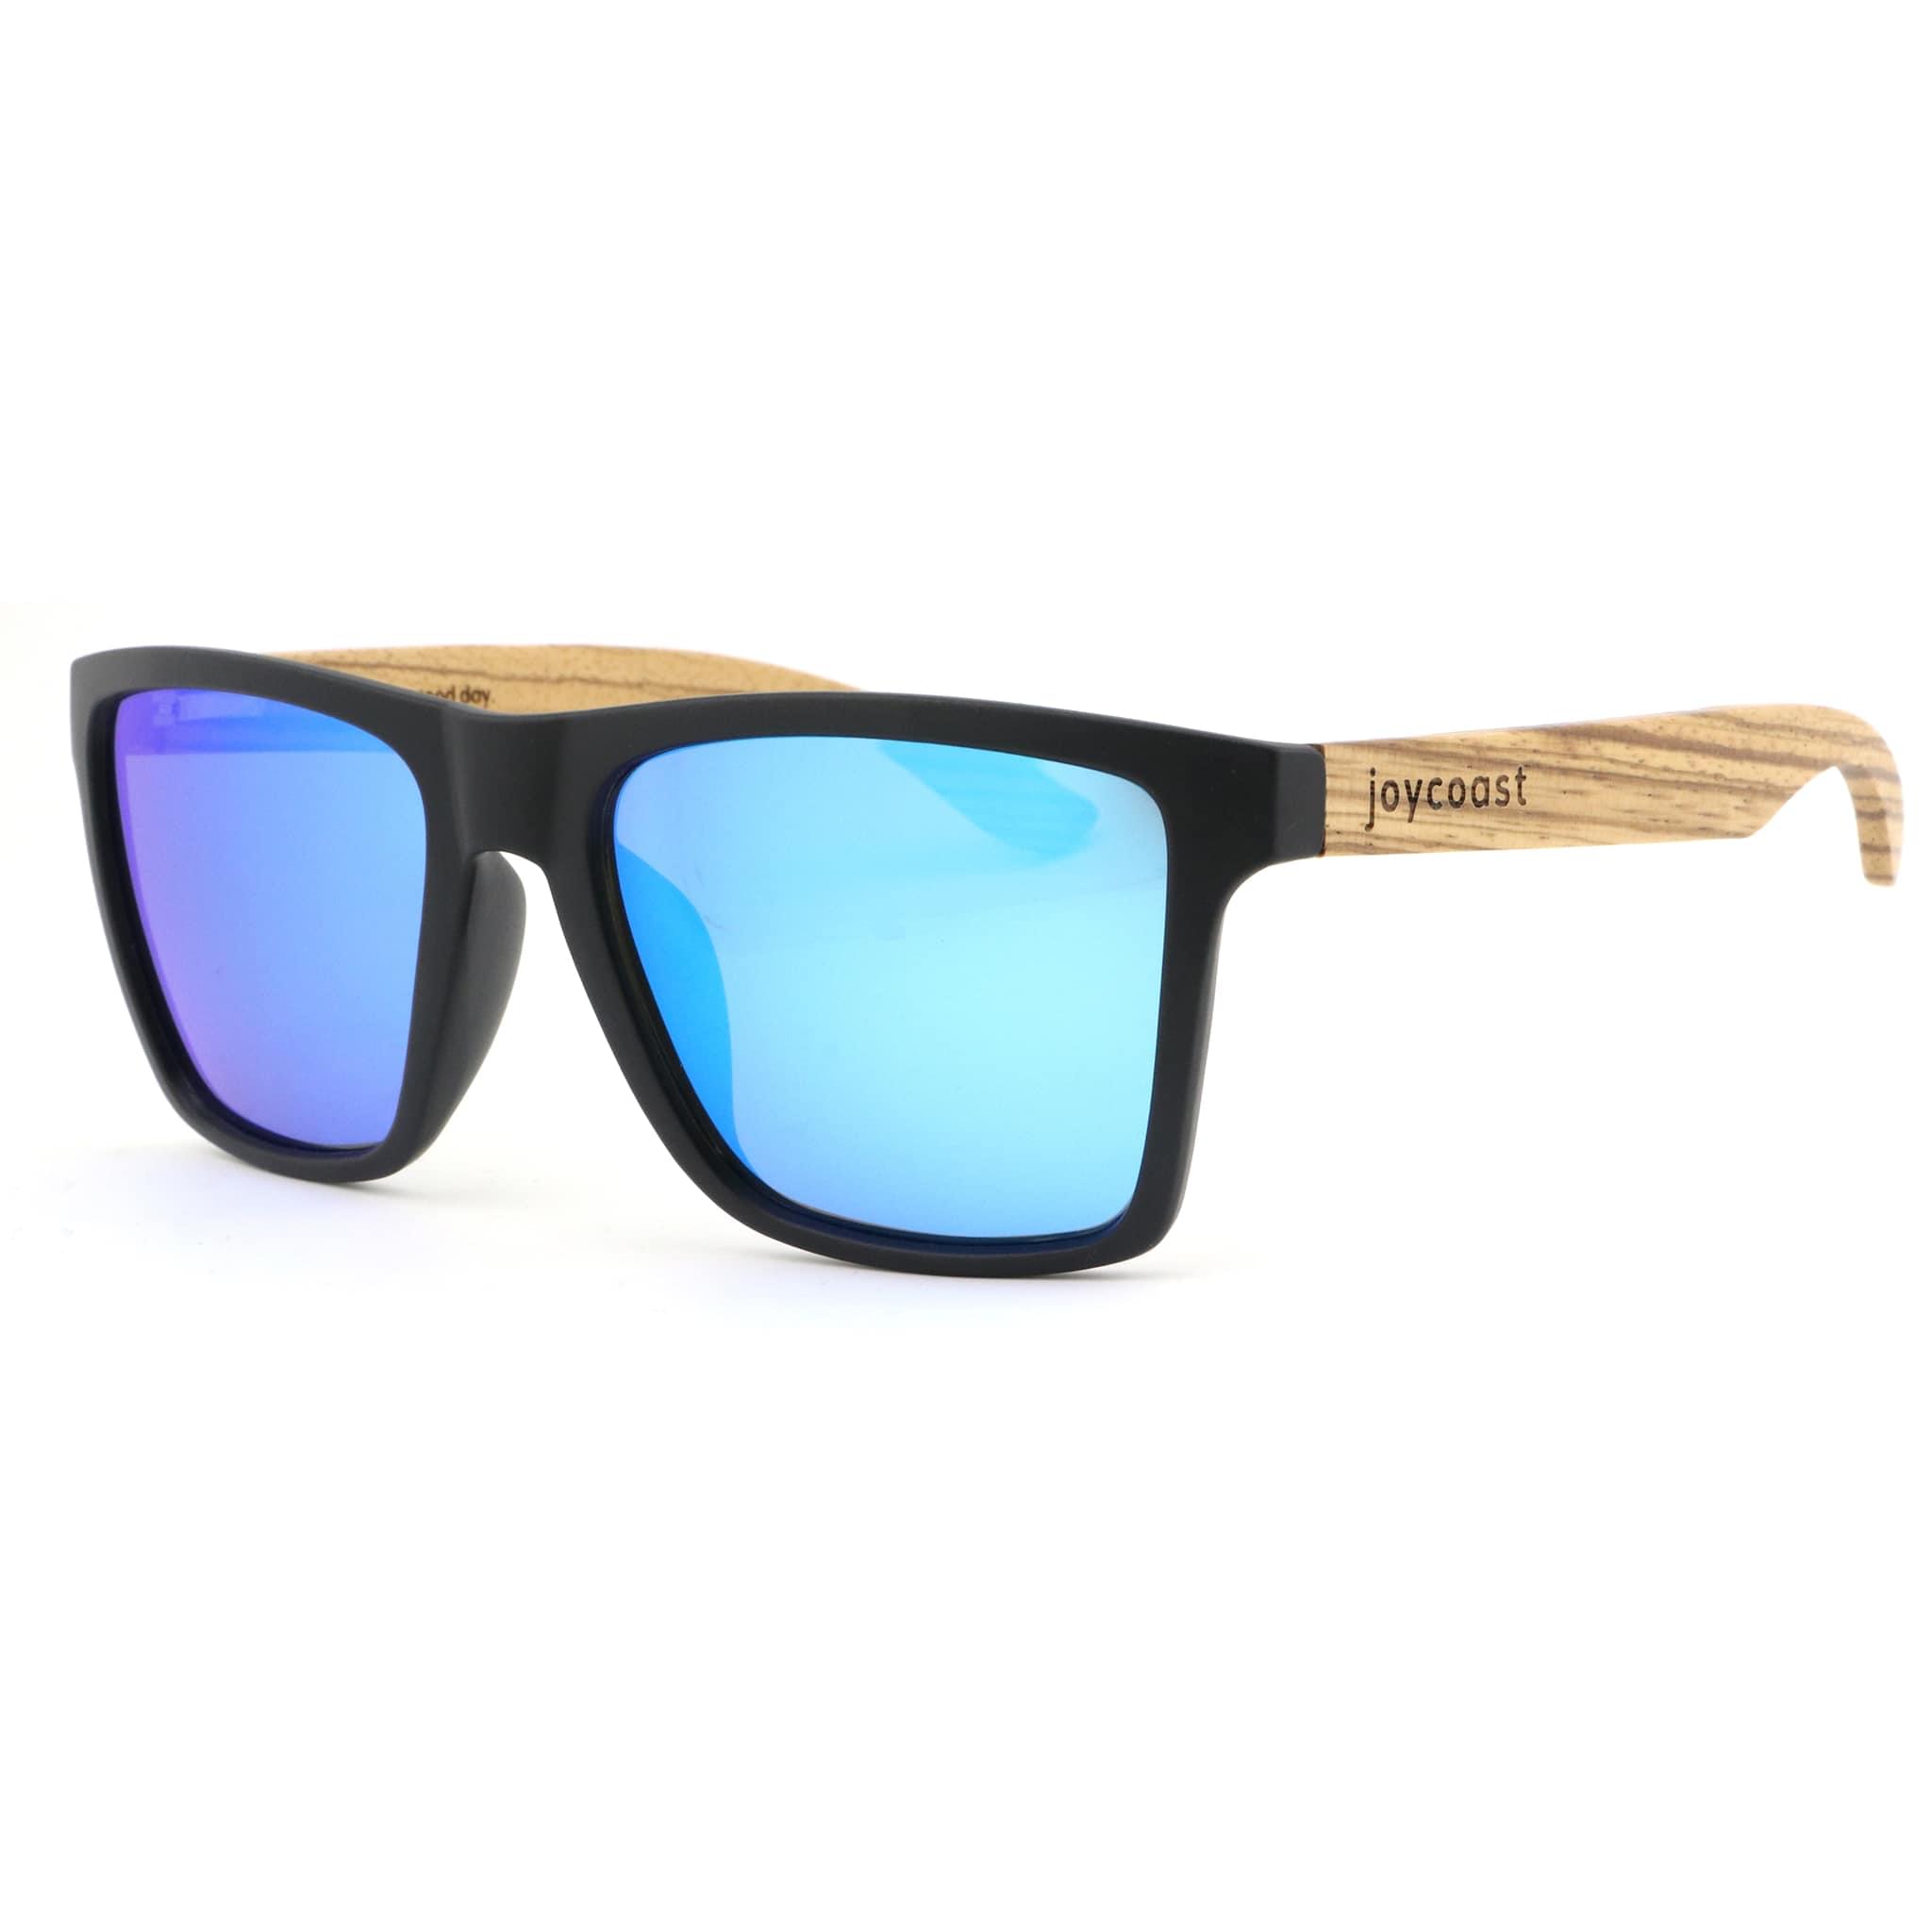 Adler | Wooden Sunglasses by Joycoast Ice Blue